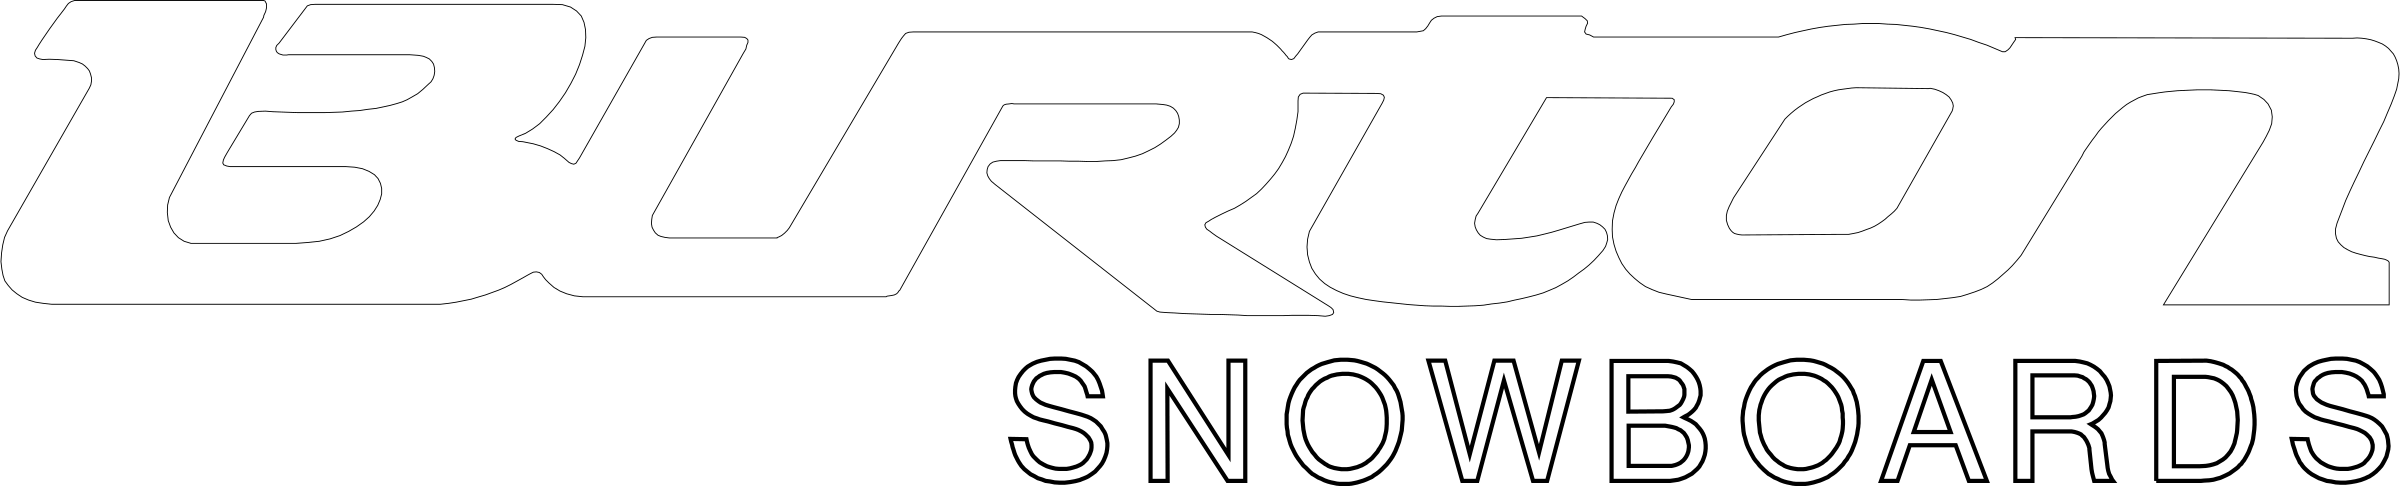 Burton Snowboards Logo - Burton Snowboards Logo PNG Transparent & SVG Vector